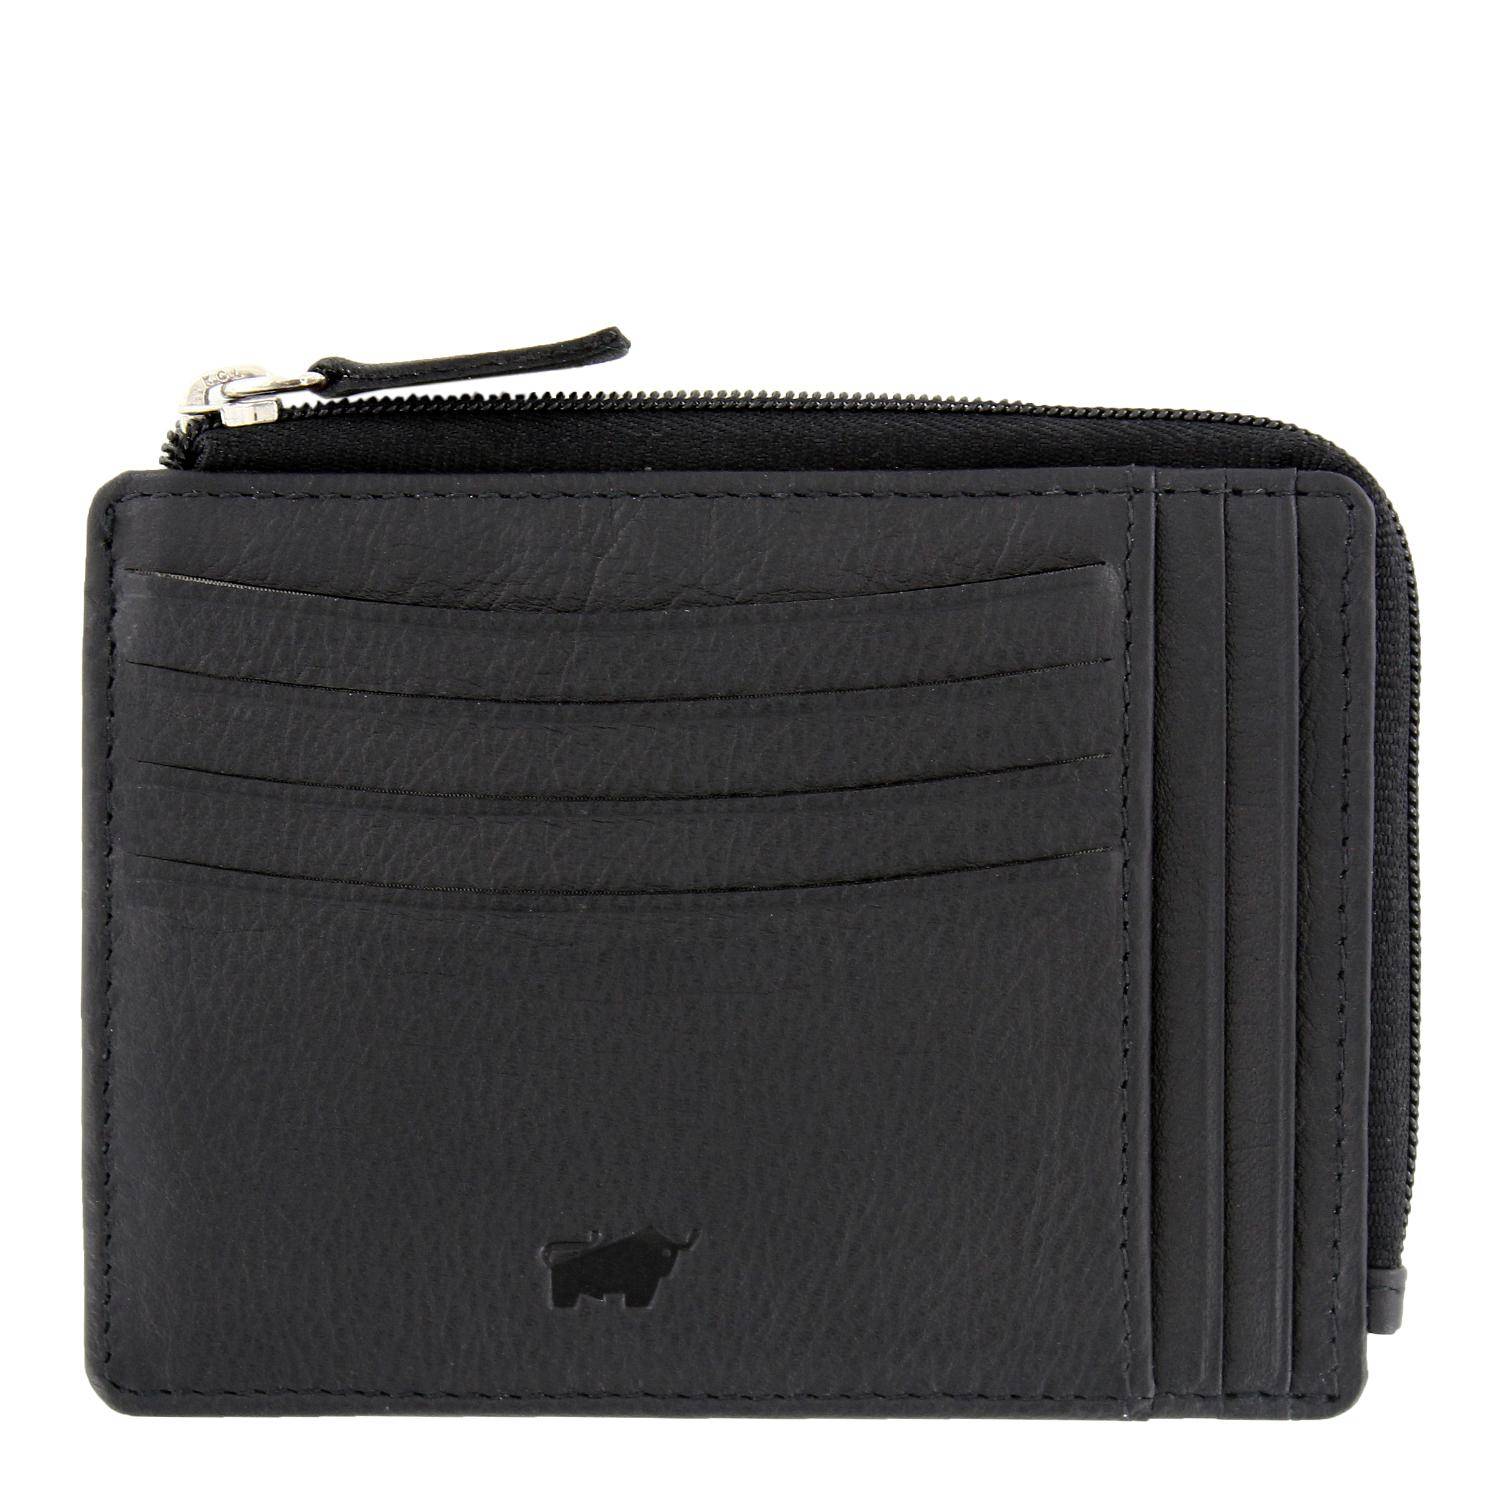 Чехол для кредитных карт Braun Buffel CARDIFF Card case + zip 8CS 89149, цвет черный, размер ONE SIZE - фото 1